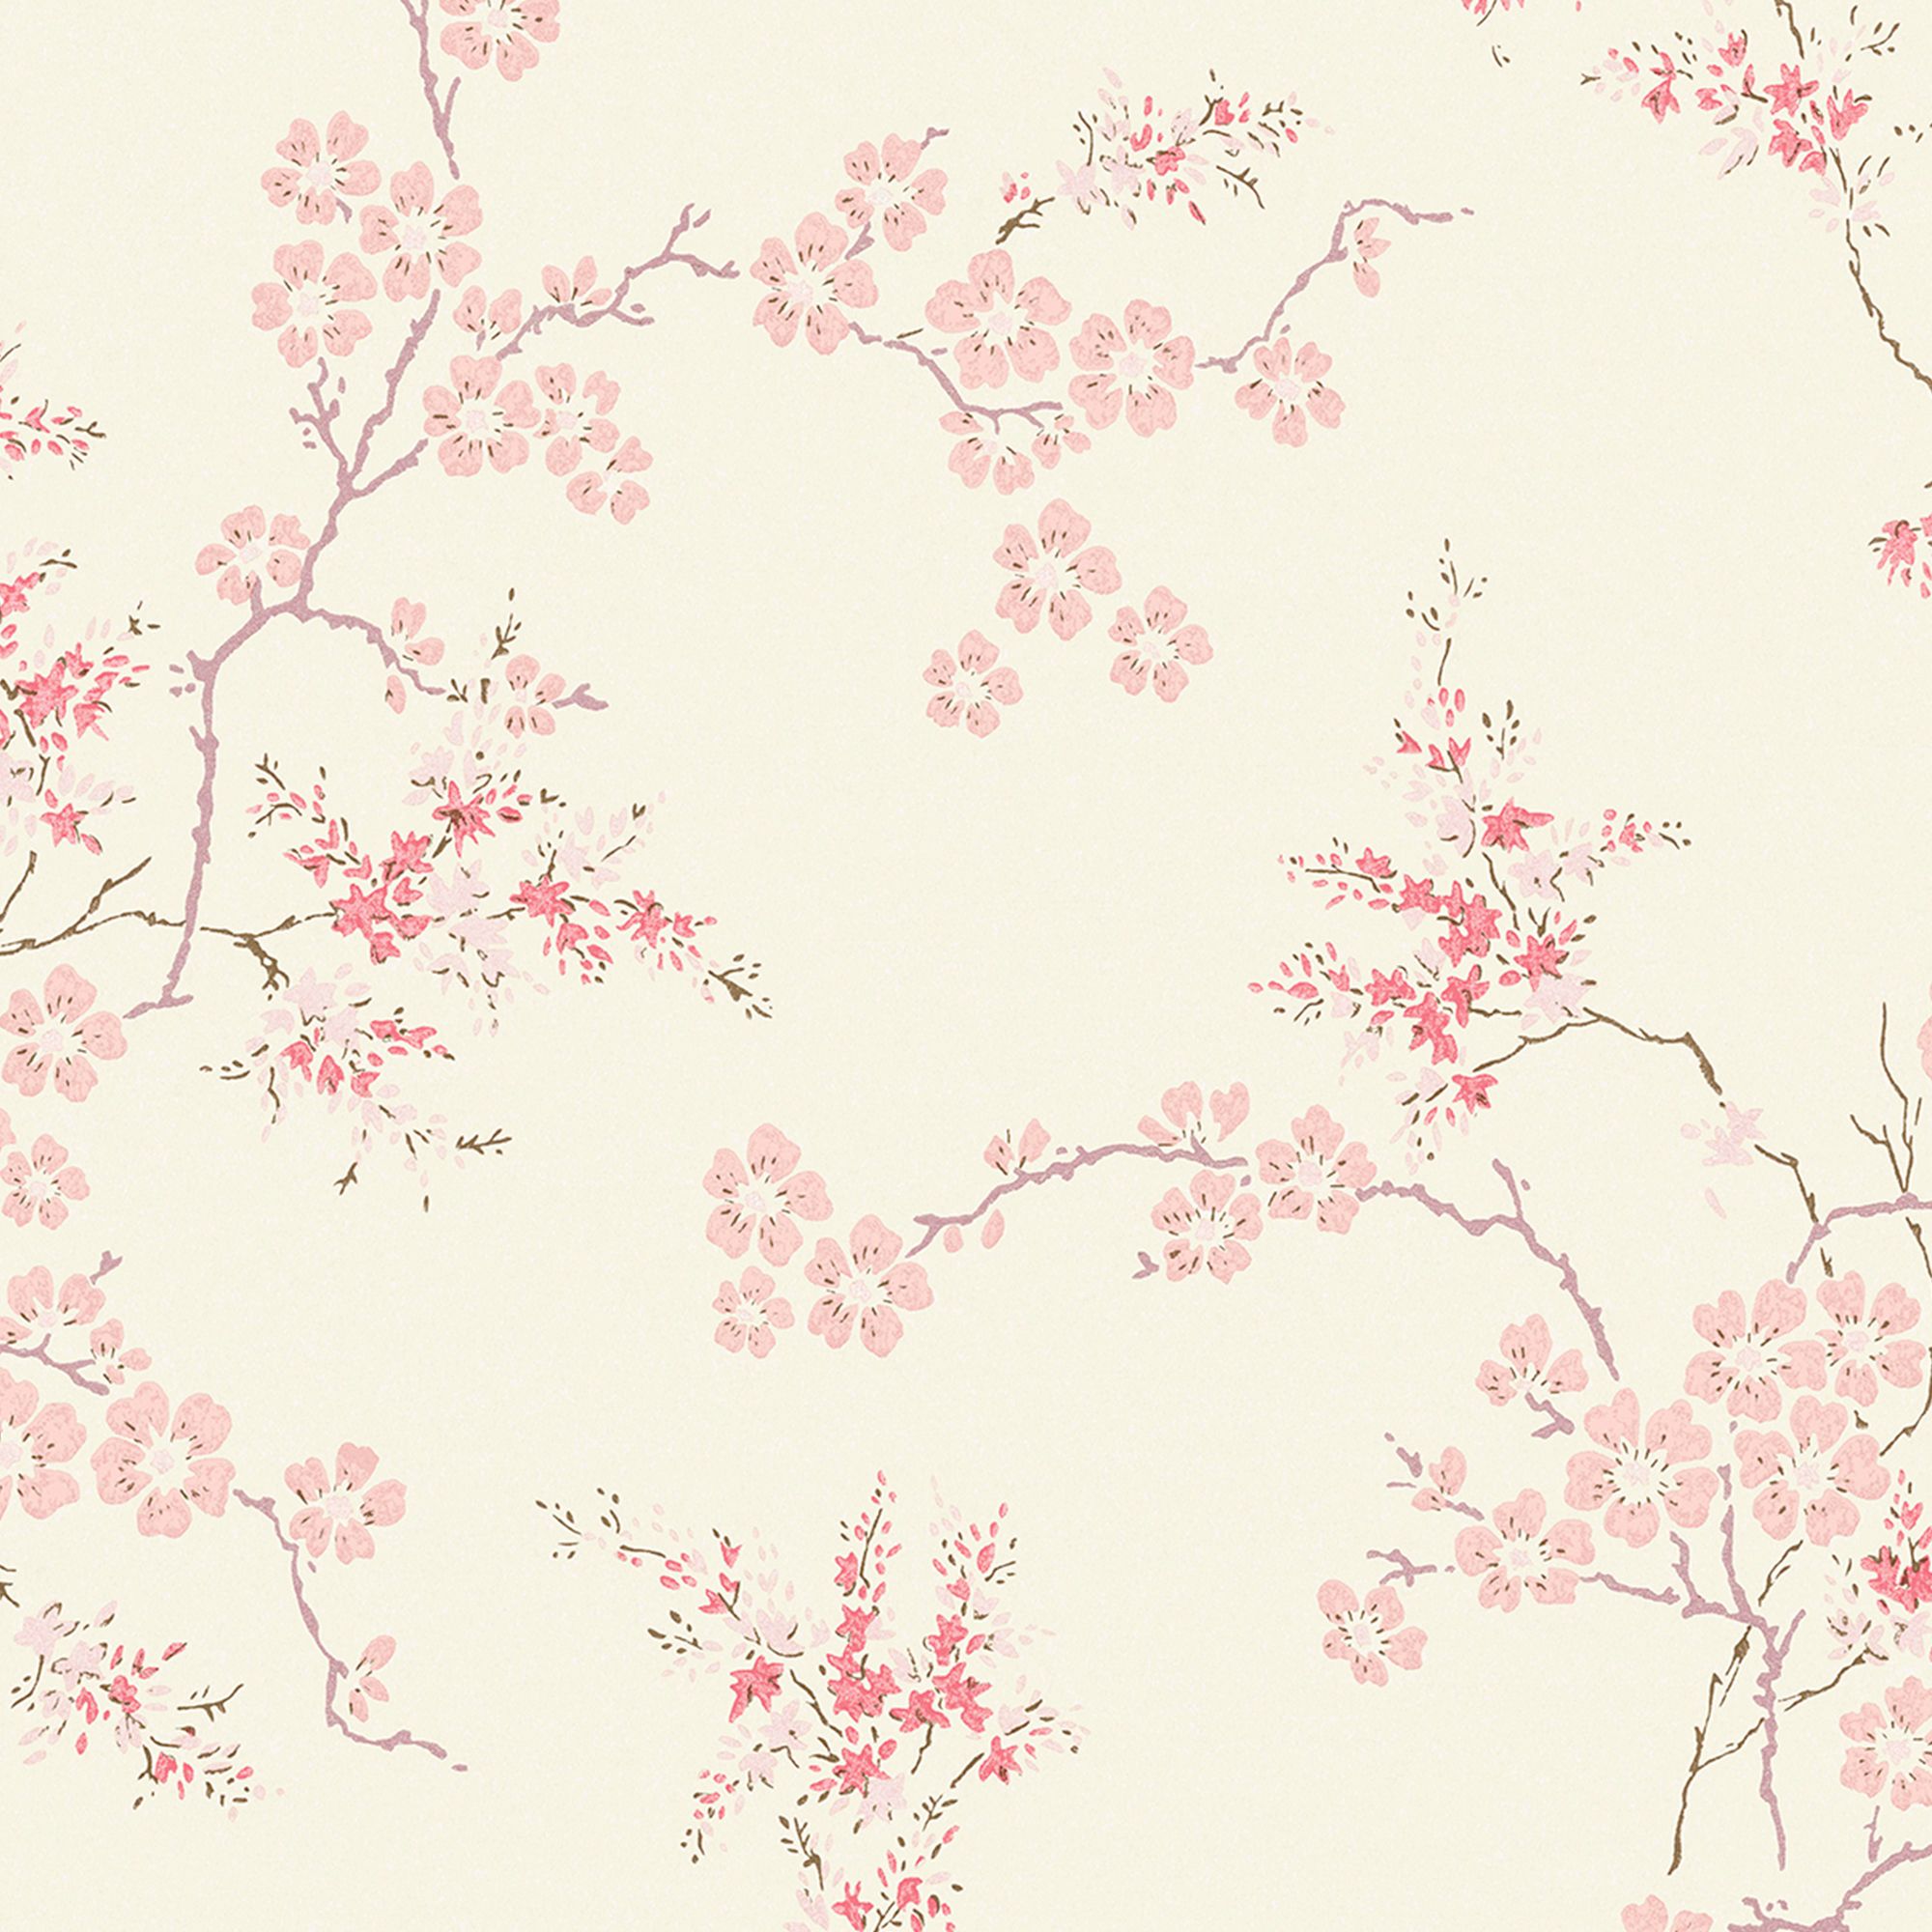 Blossom Phone Wallpaper Backgrounds - Sophie Laura